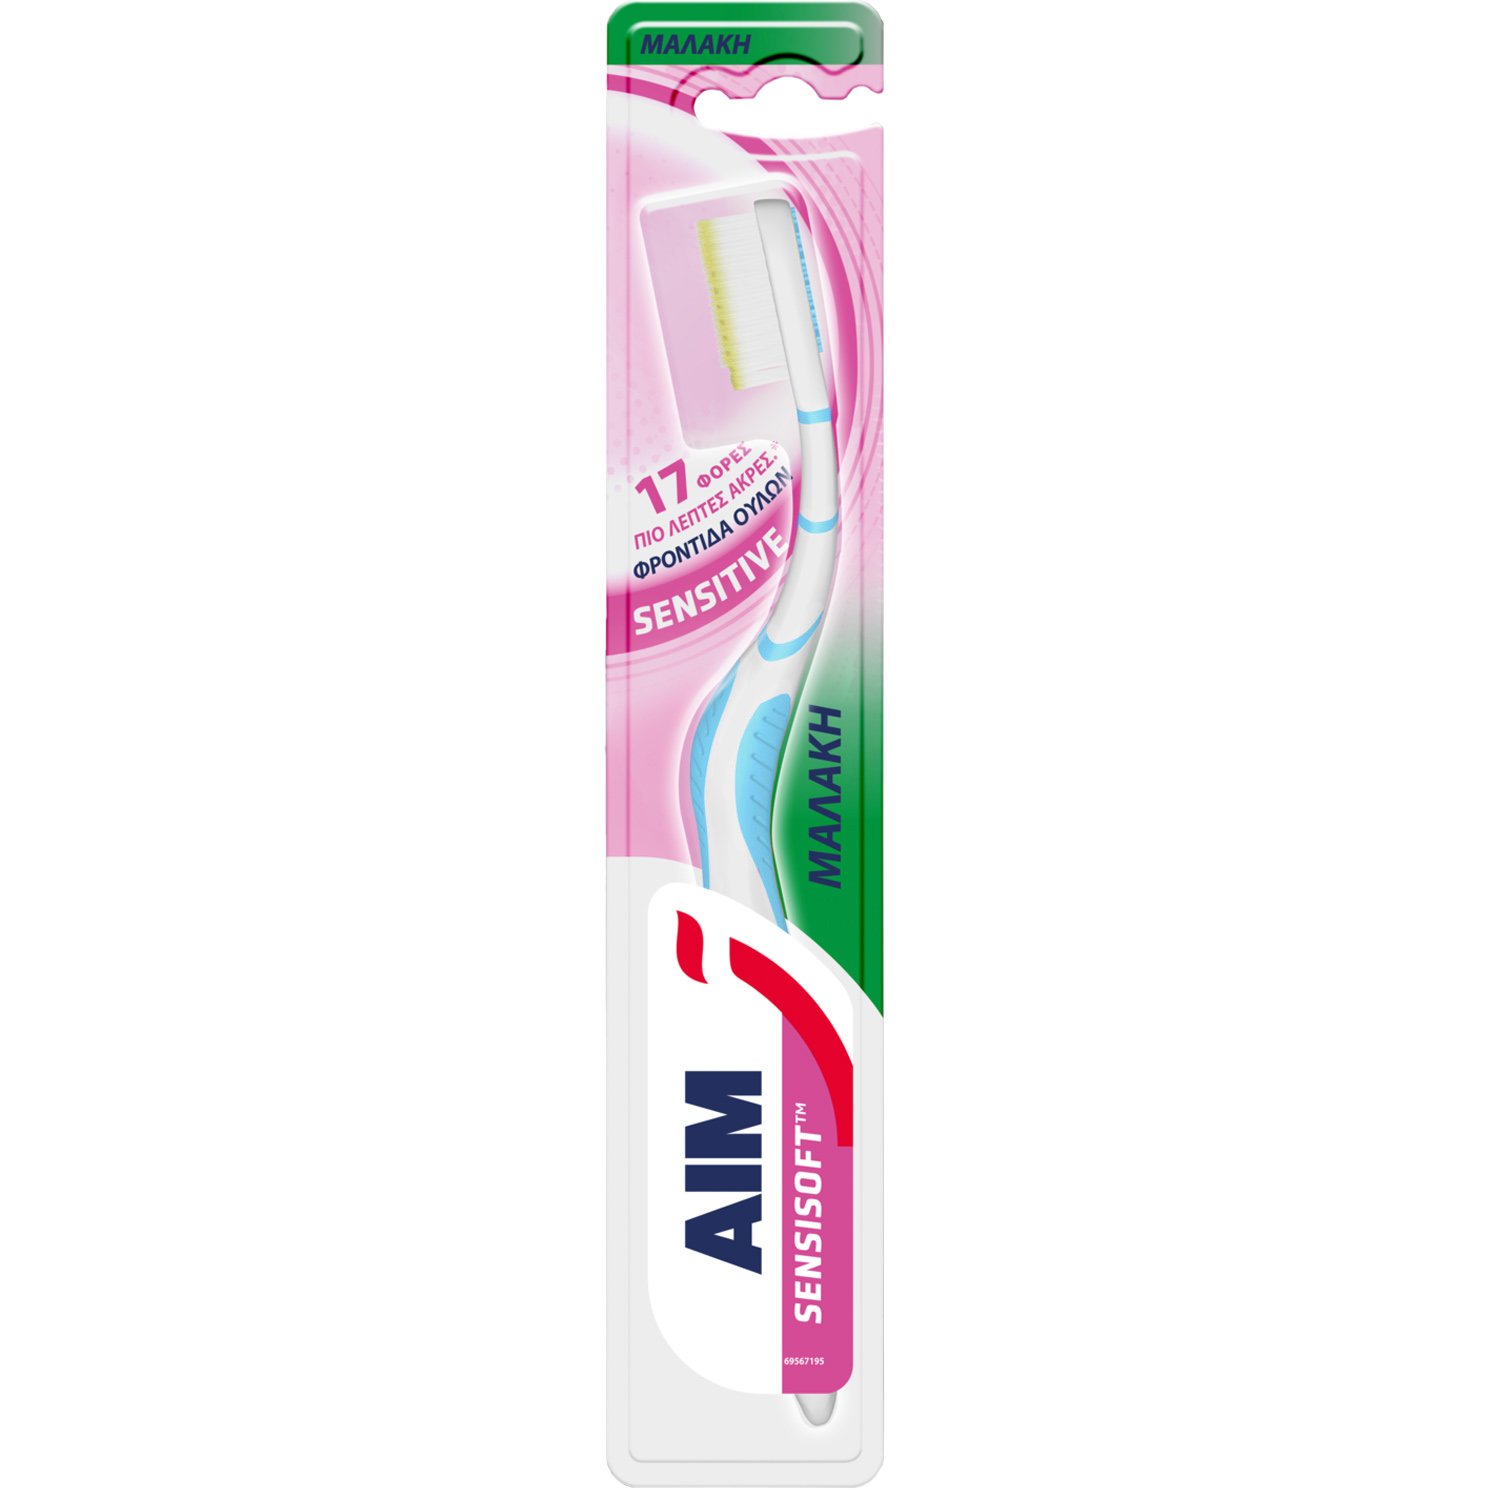 Aim Sensisoft Sensitive Toothbrush Χειροκίνητη Μαλακή Οδοντόβουρτσα με 17 Φορές πιο Λεπτές Άκρες για τη Φροντίδα των Ούλων 1 Τεμάχιο – Γαλάζιο / Κίτρινο